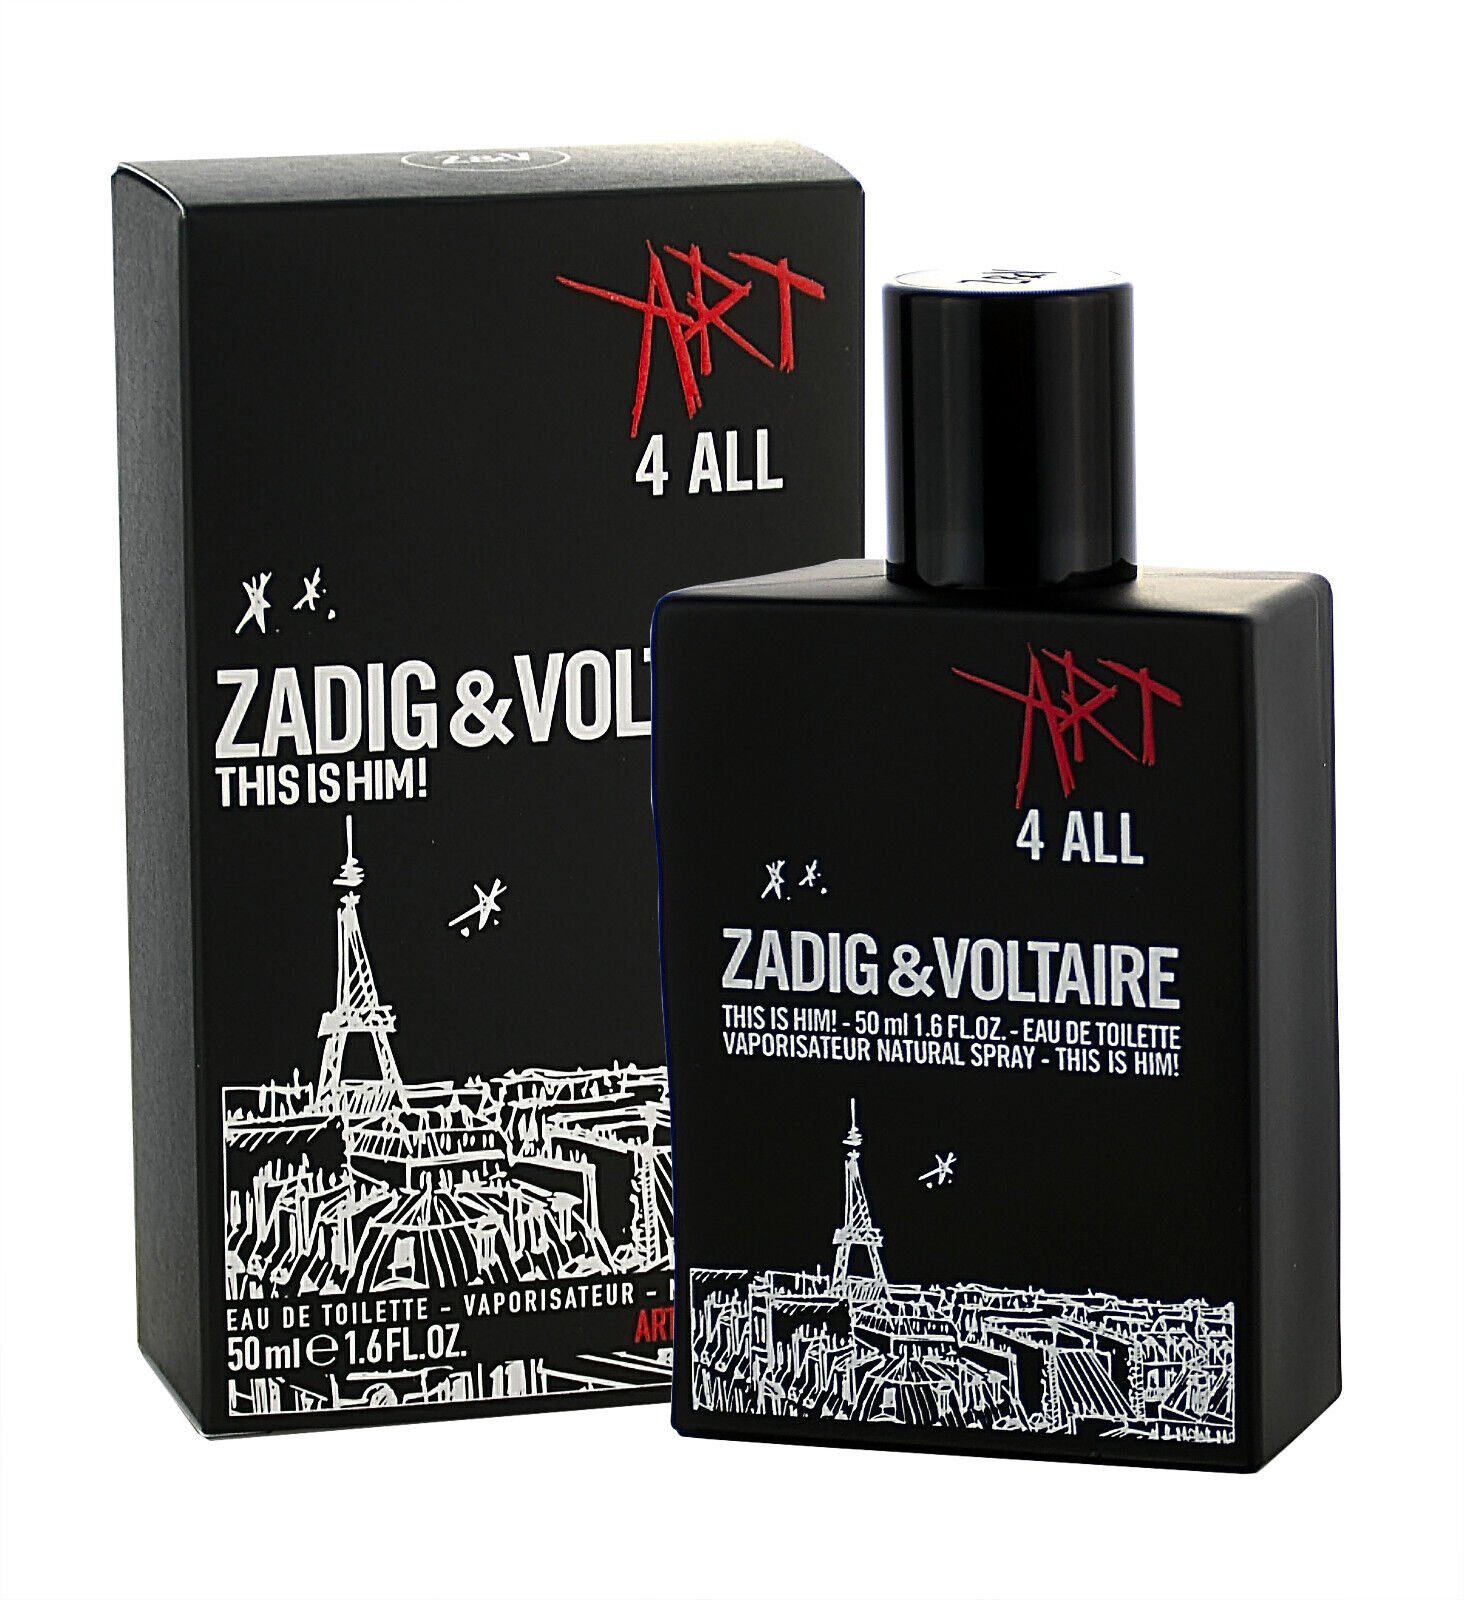 Voltaire Art de & 50ml This Eau Zadig Edition VOLTAIRE is 4 All ZADIG Toilette & Limited EDT Him!